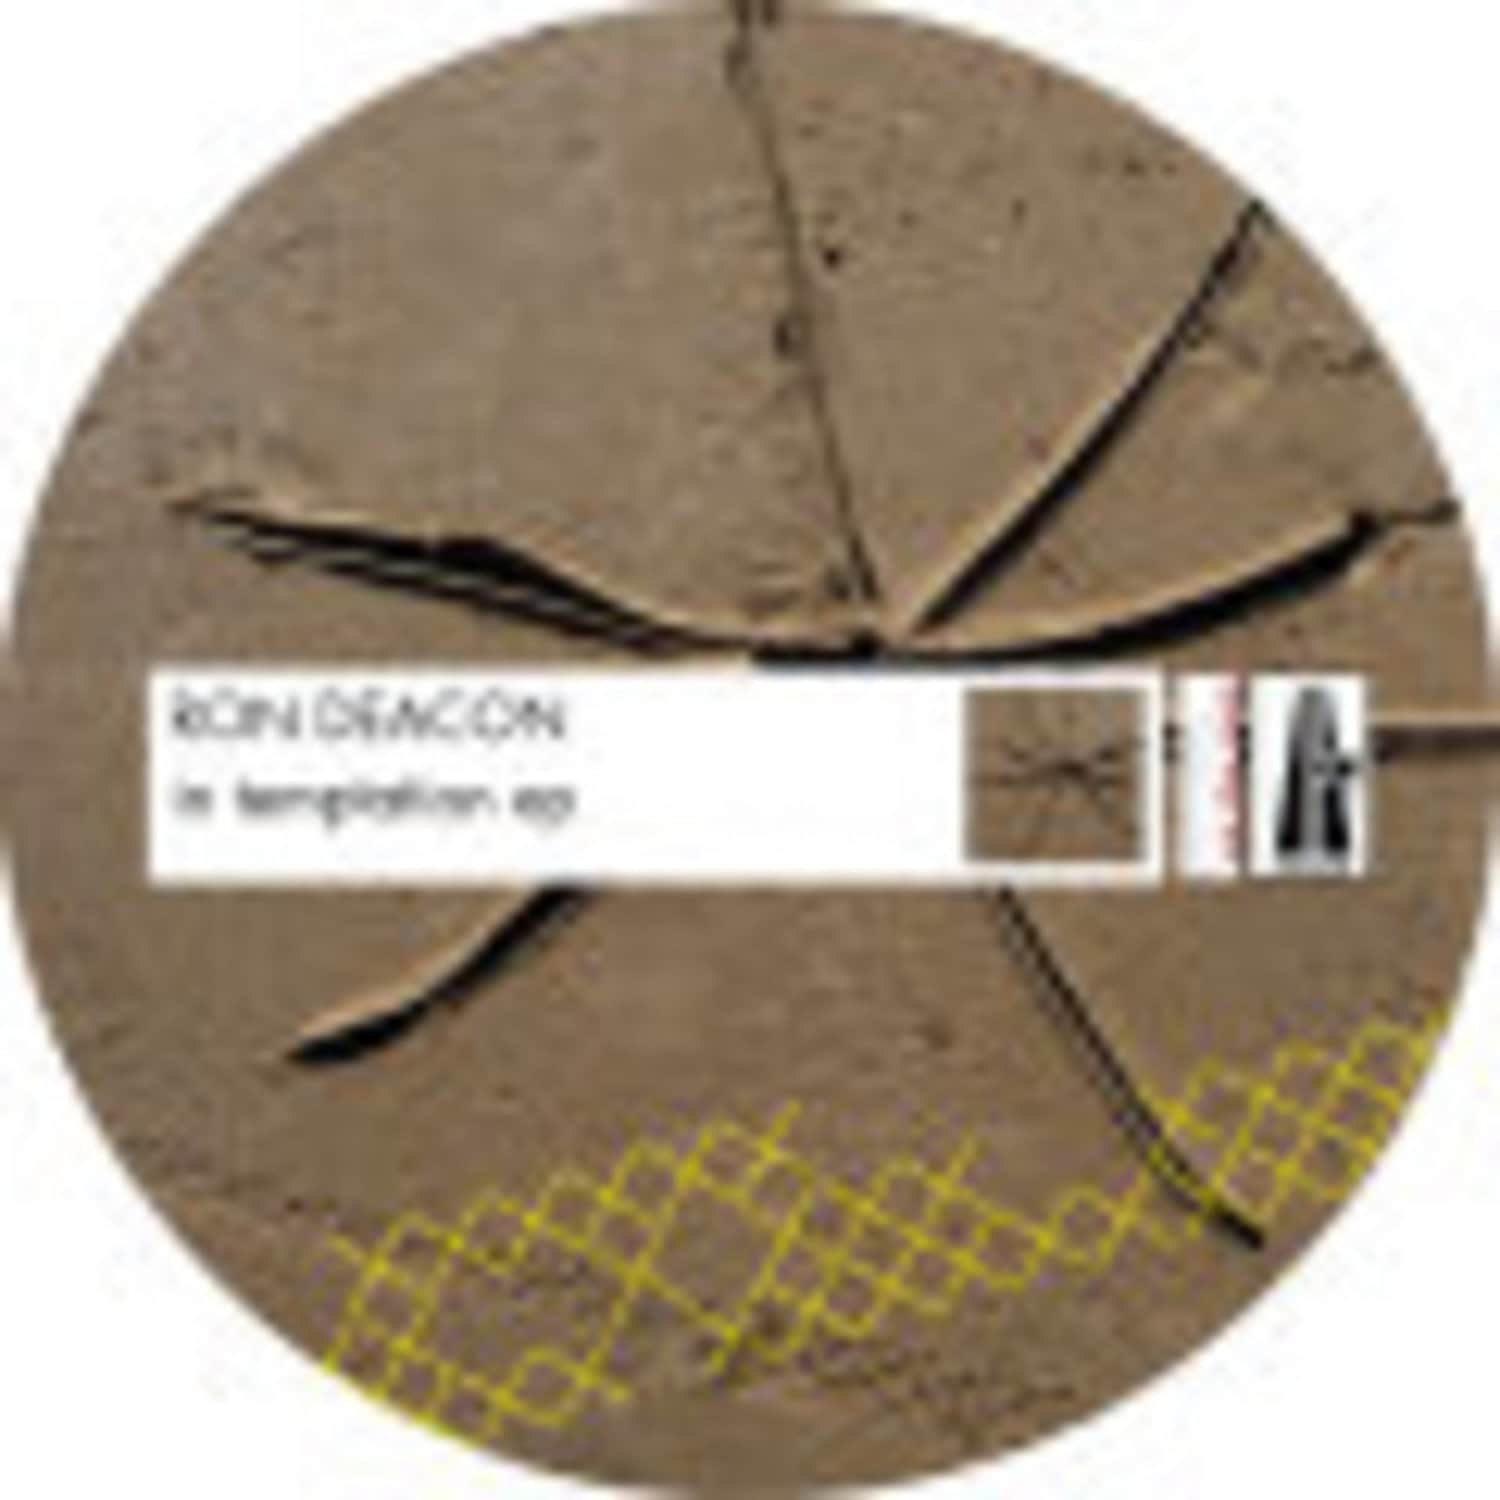 Ron Deacon - IN TEMPTATION EP